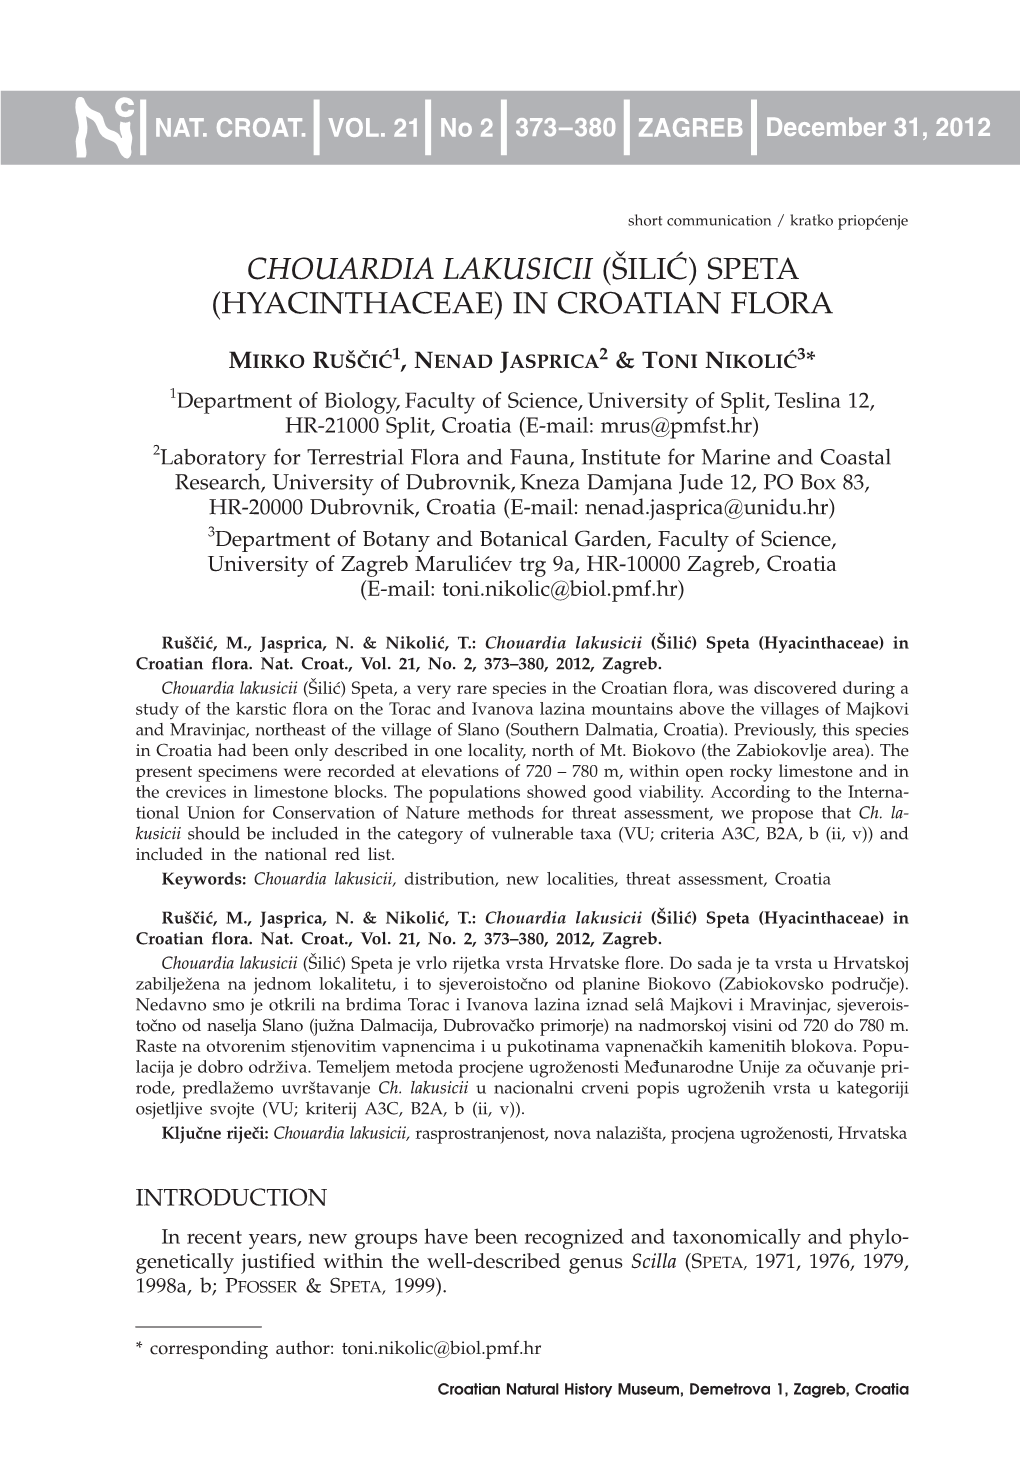 Chouardia Lakusicii ([Ili]) Speta (Hyacinthaceae) in Croatian Flora